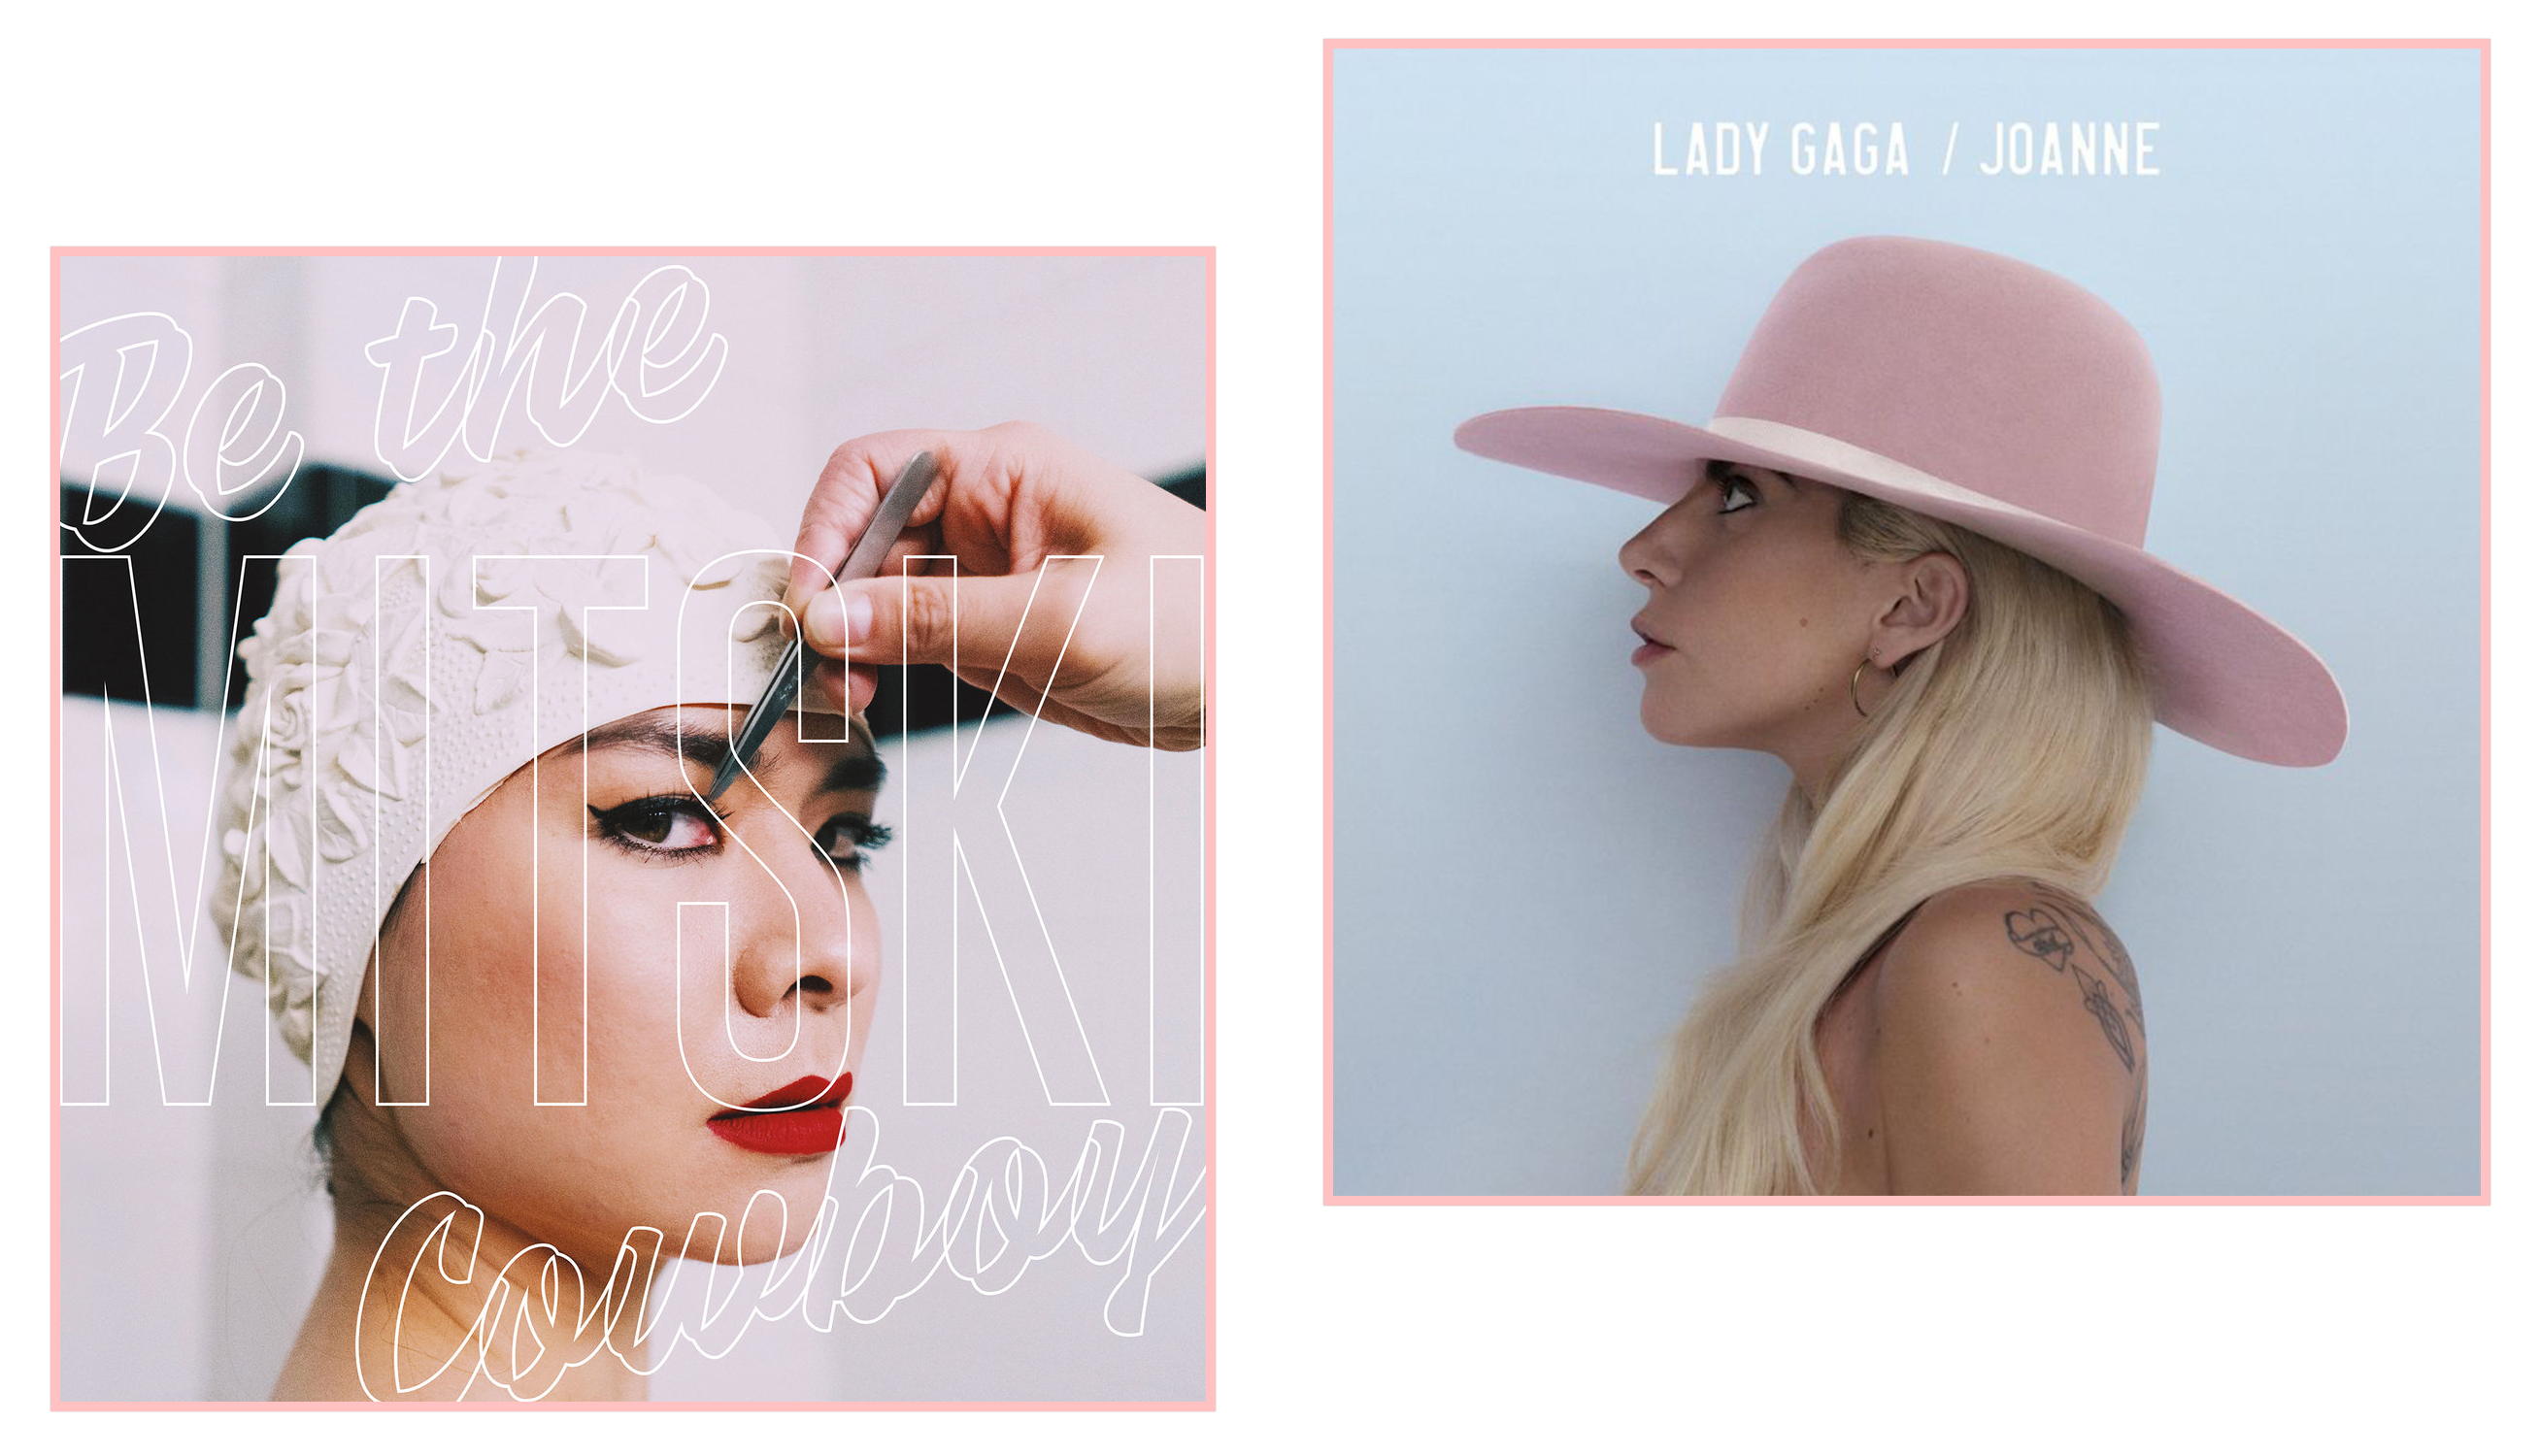 Mitski's "Be the Cowboy" and Lady Gaga's "Joanne" album covers